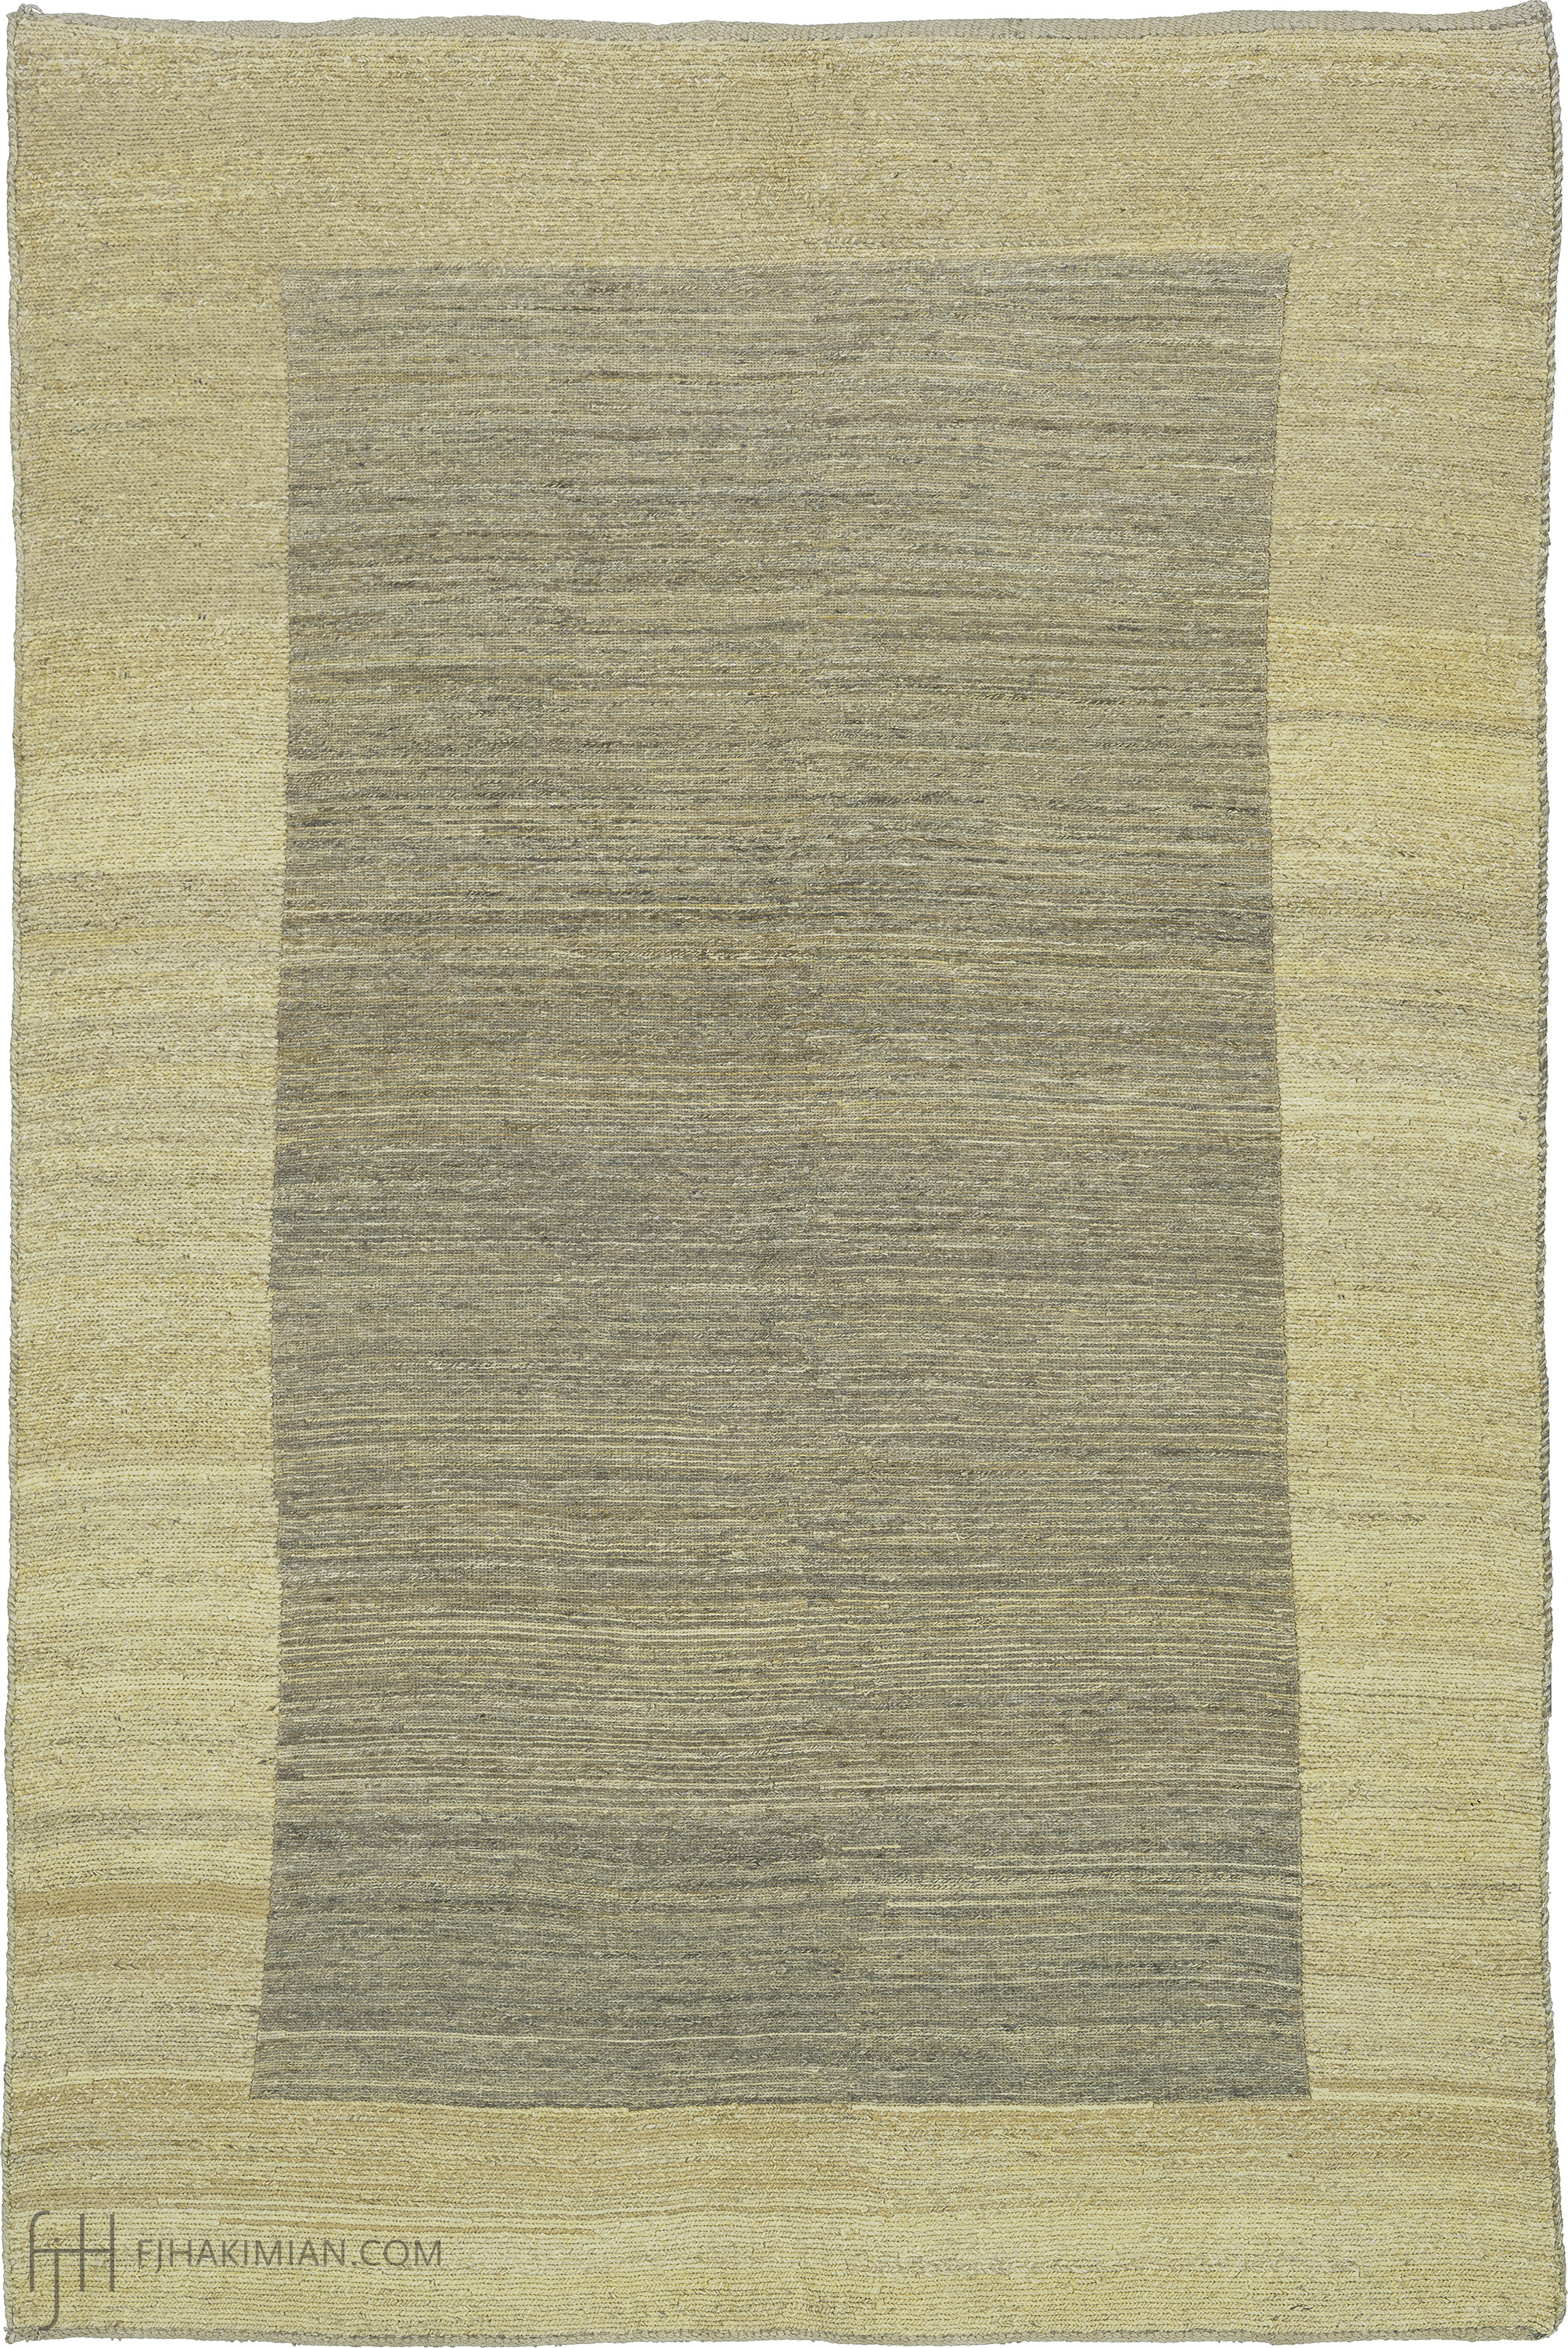 16137 Soumak Design | Custom Soumak Carpet | FJ Hakimian | Carpet Gallery in NY